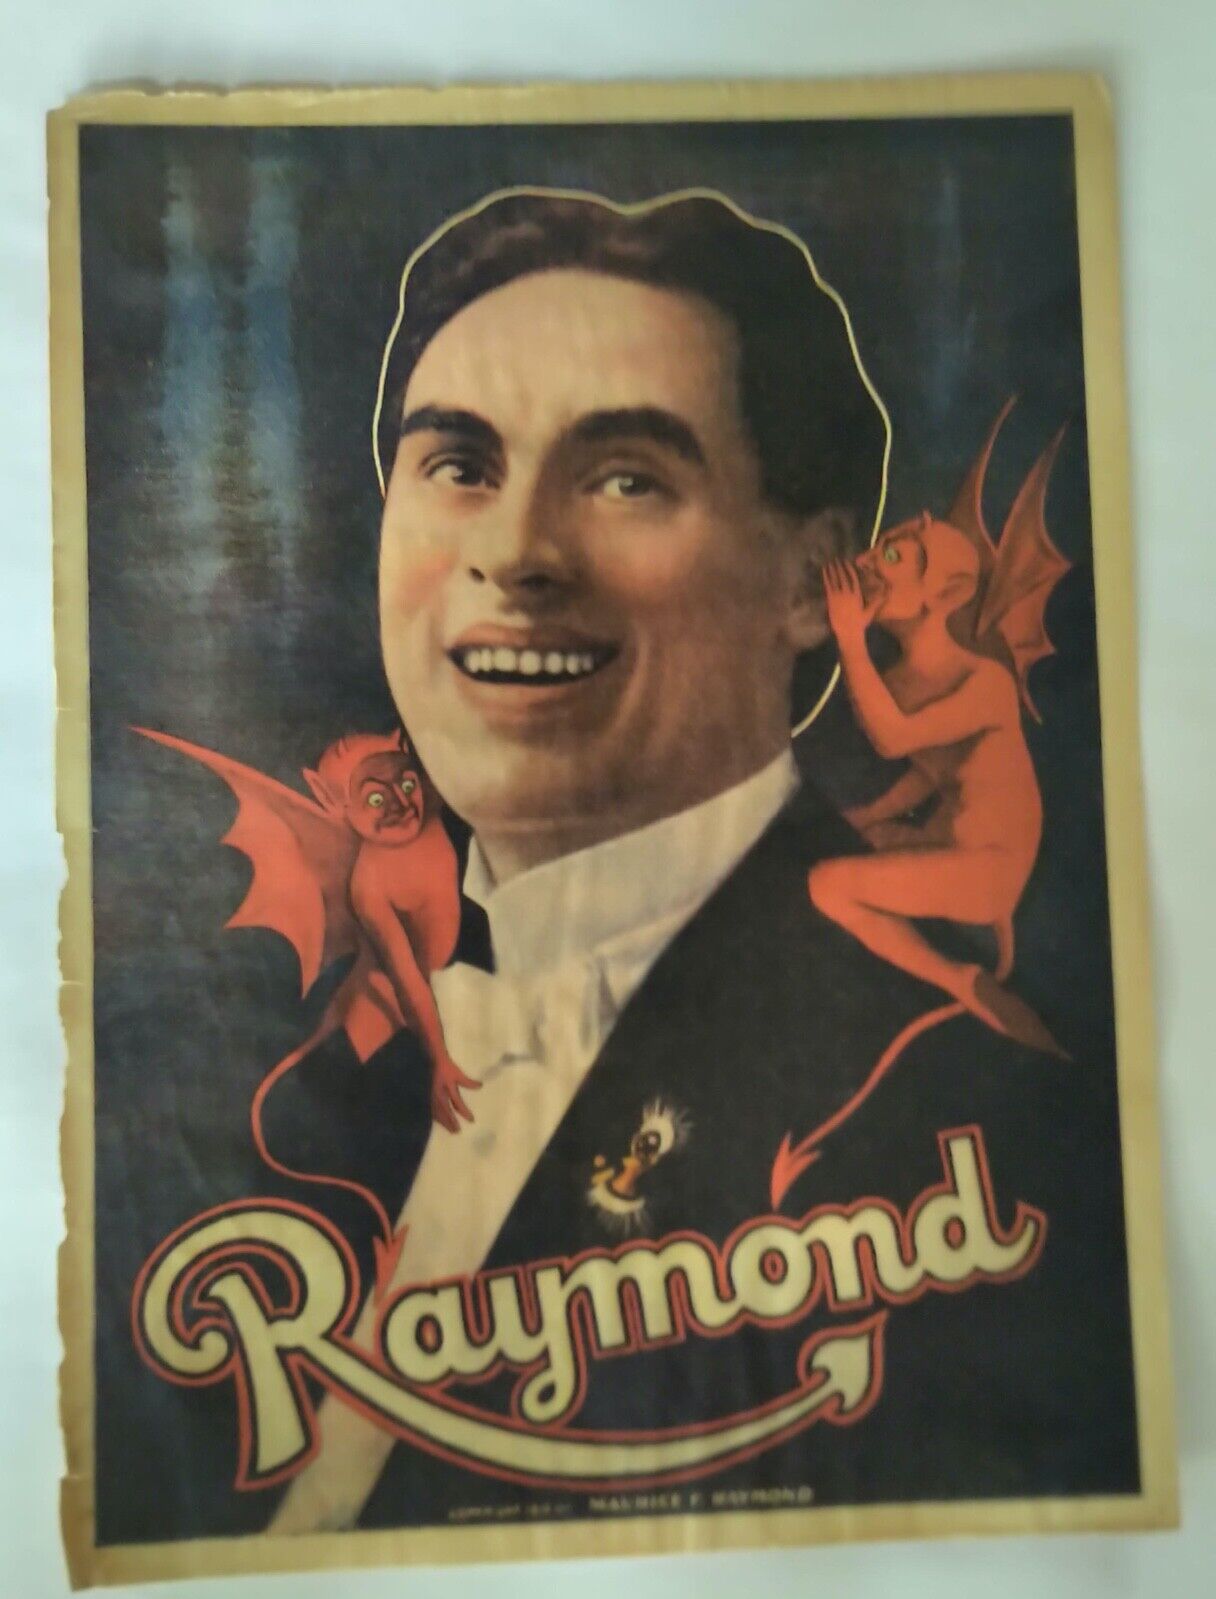 The Great Raymond Original Window Poster